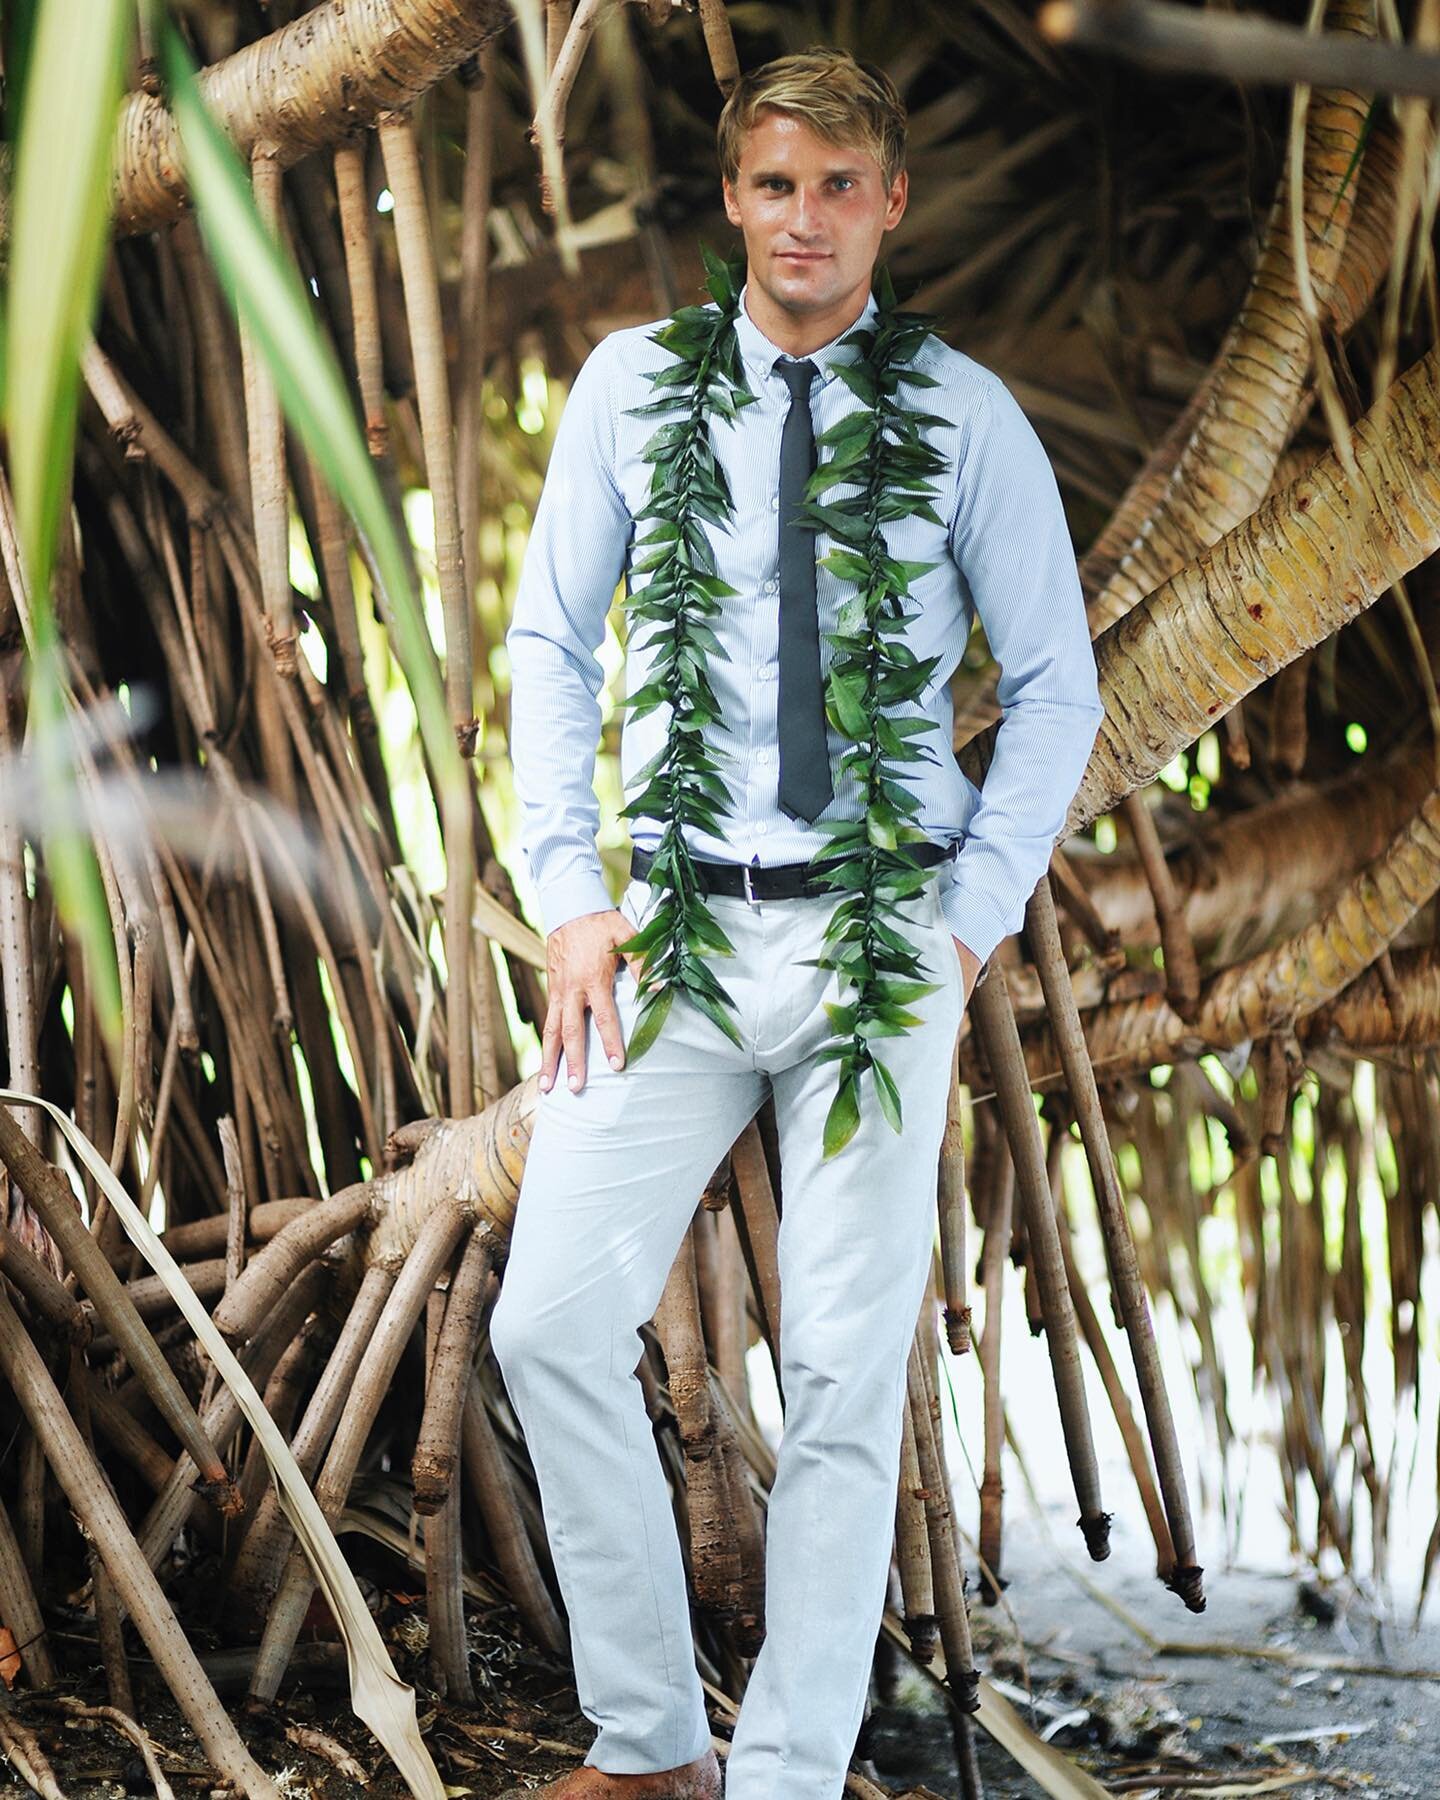 Handsome Thomas at the @bayerestate #portrait #portraitphotography #portraitphotographer #hawaiiwedding